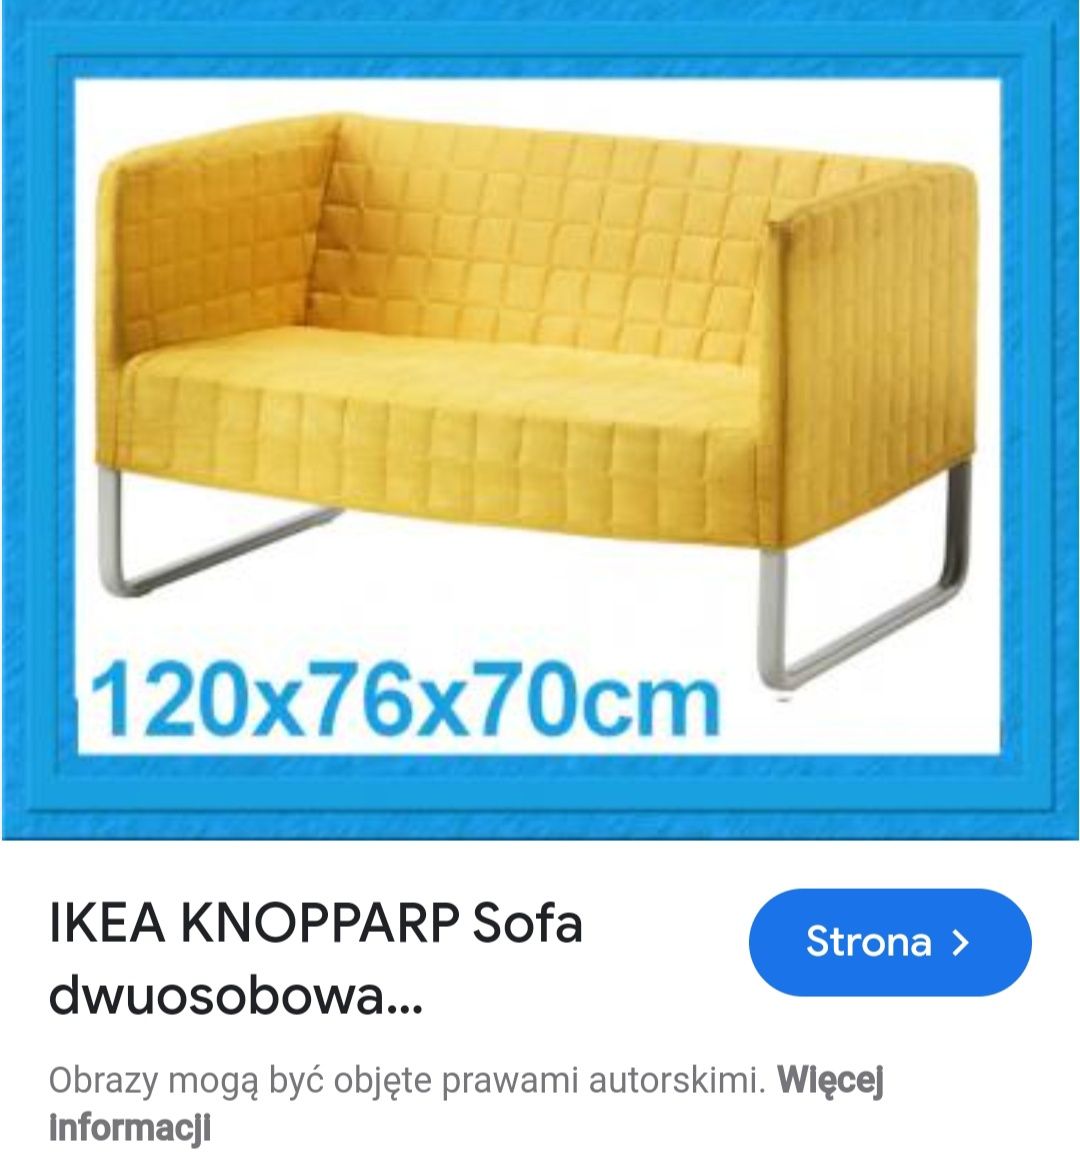 Sofa dwuosobowa IKEA KNOPPARP